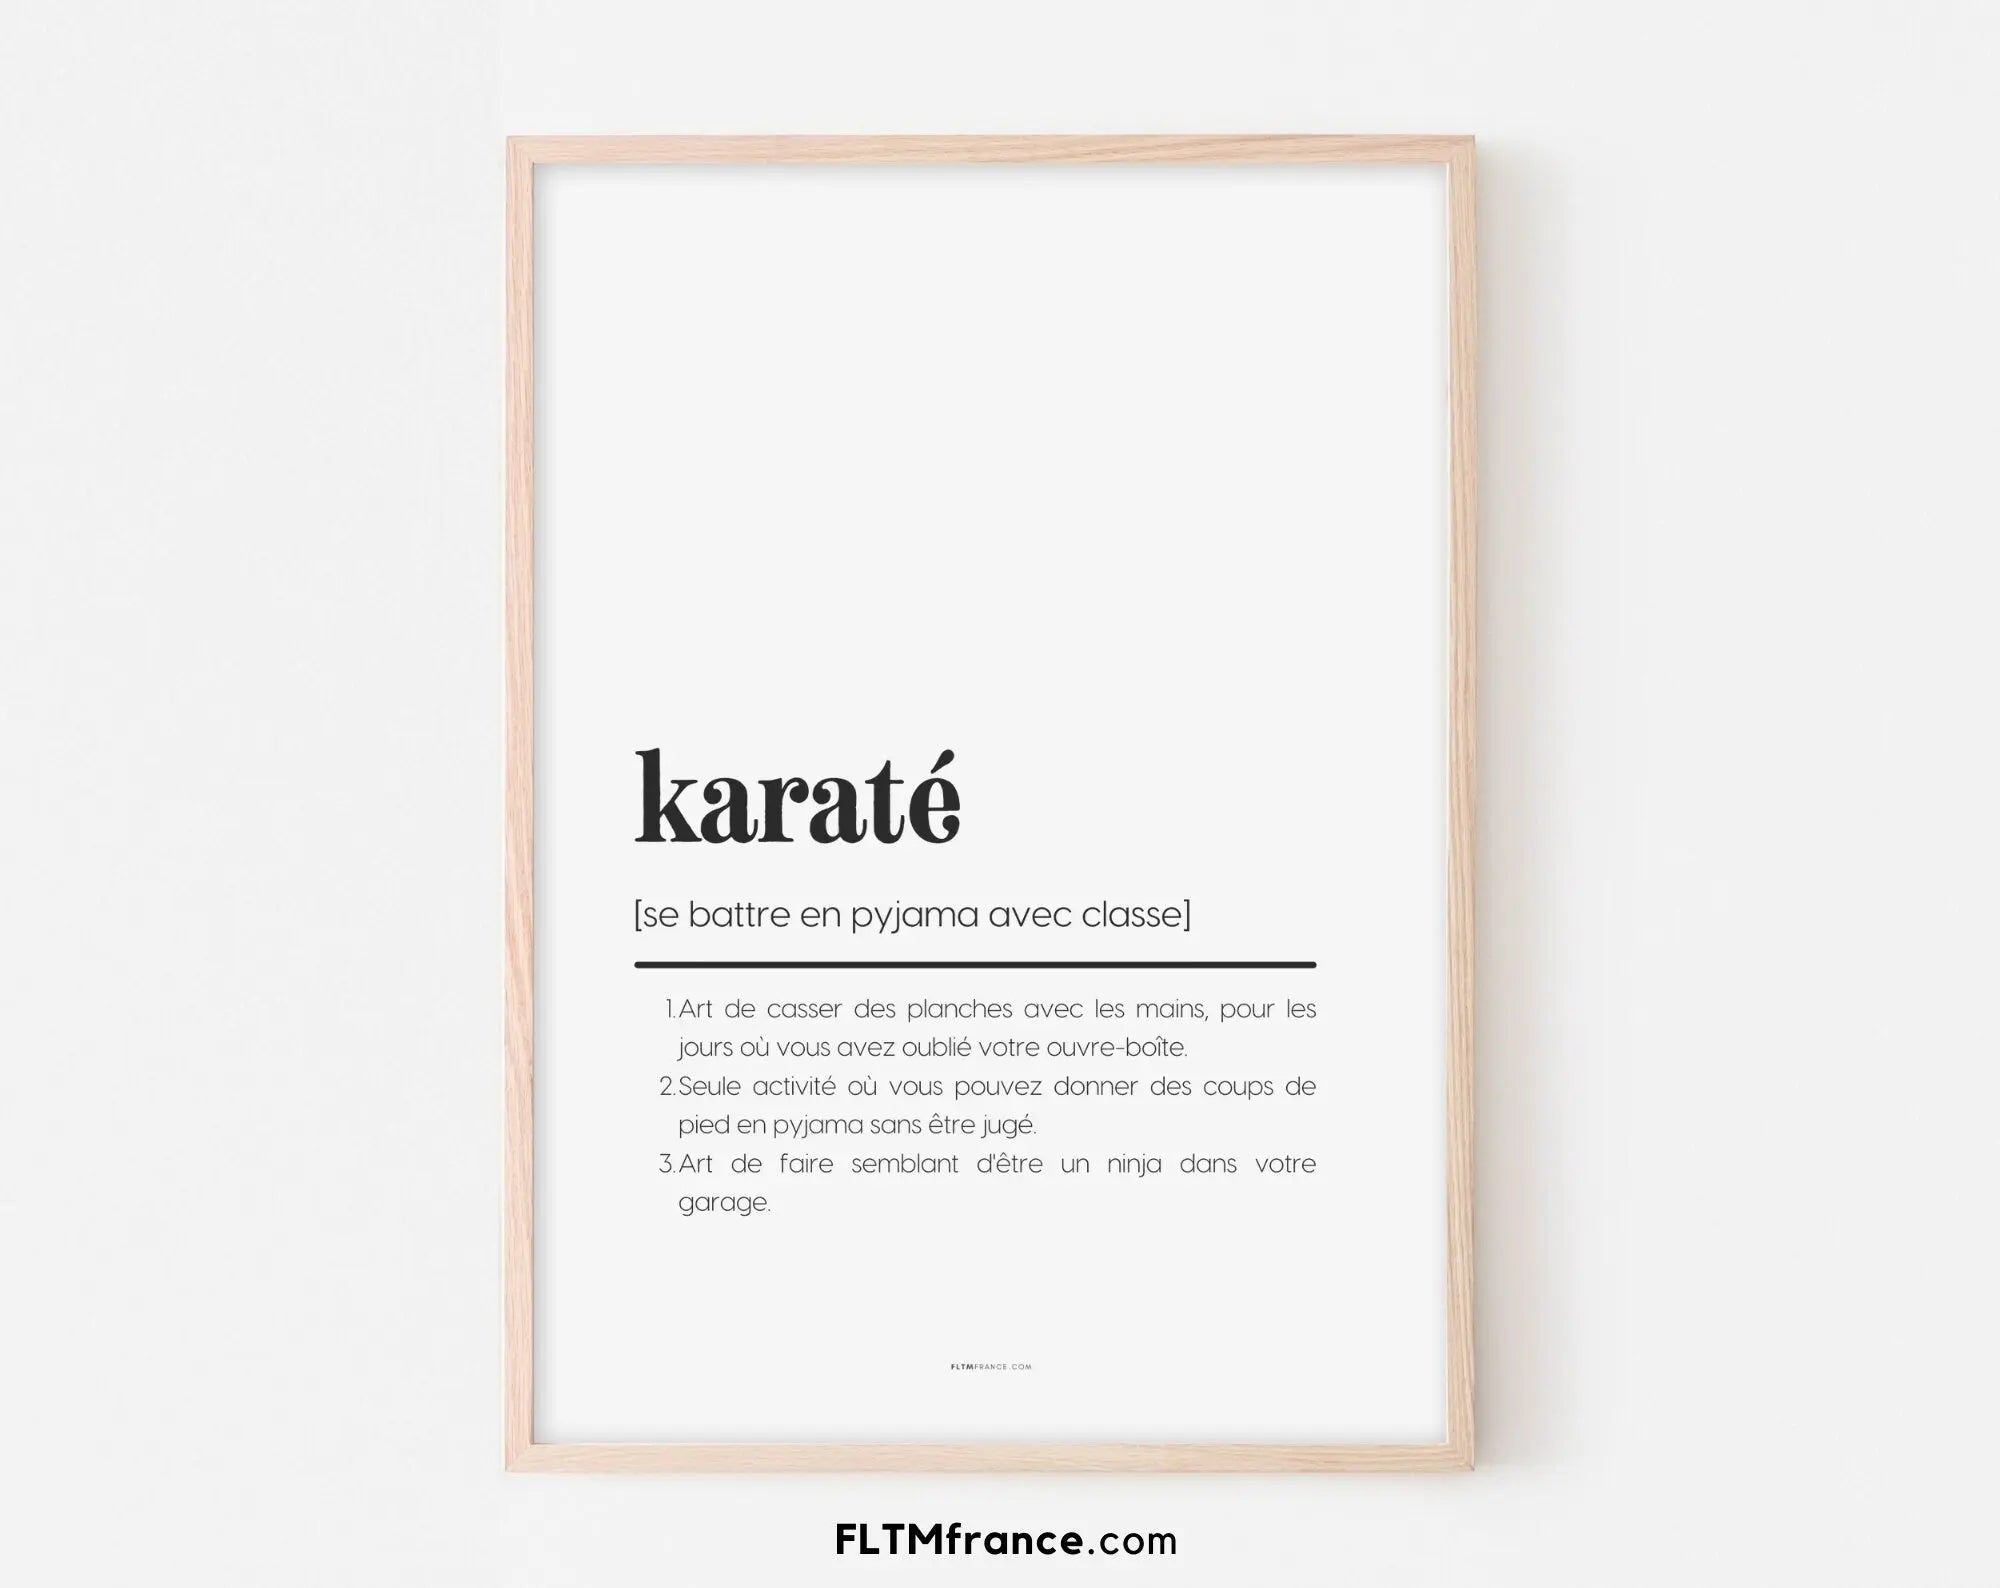 Karate definition poster - Sport humor definition poster